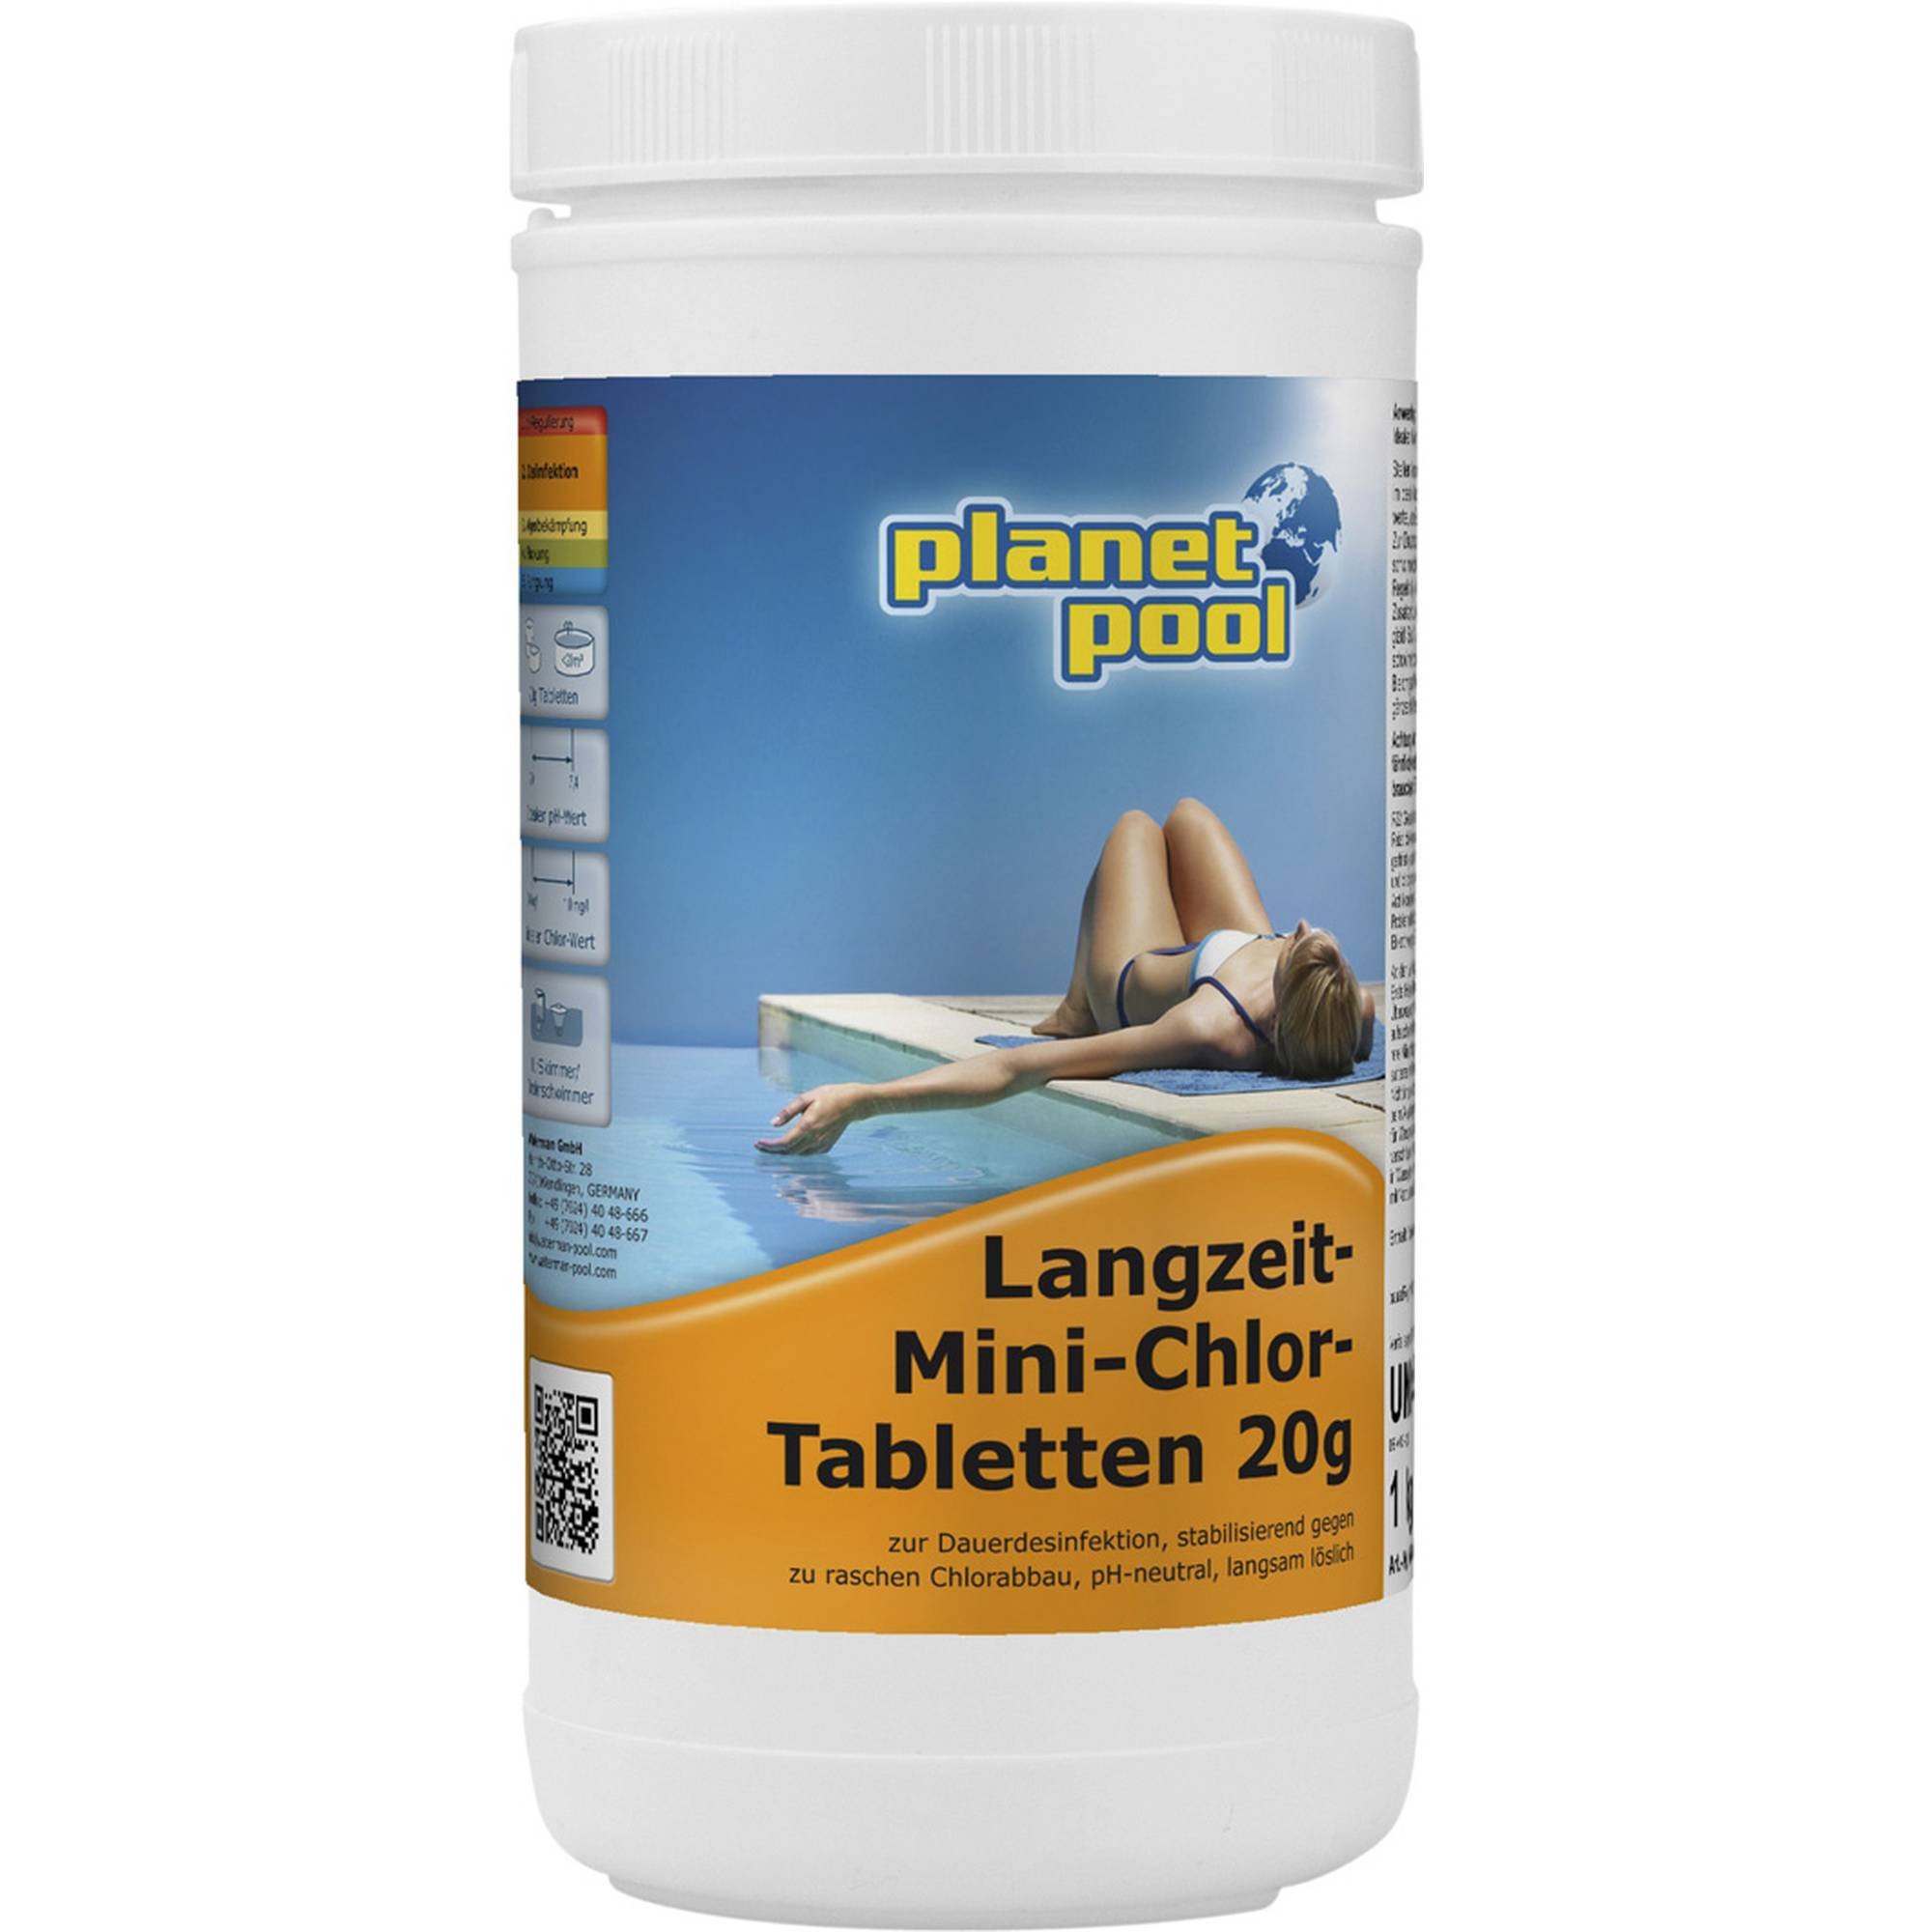 Planet Pool - Langzeit-Mini-Chlor-Tabletten 20 g, 1 kg